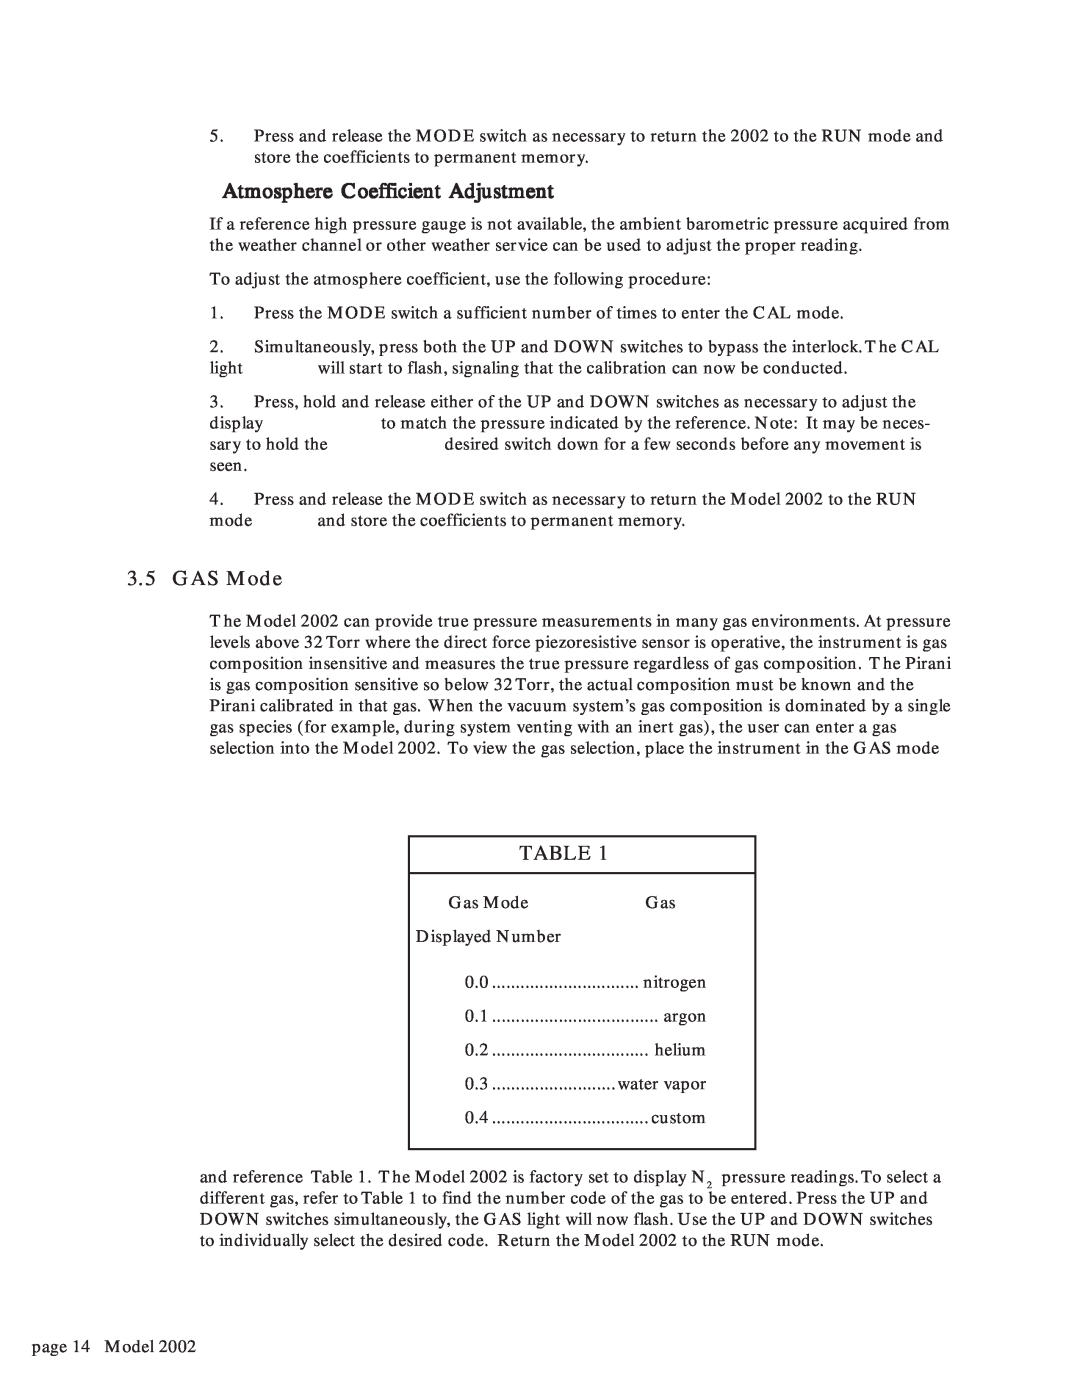 Teledyne 2002 instruction manual Atmosphere Coefficient Adjustment, GAS Mode 